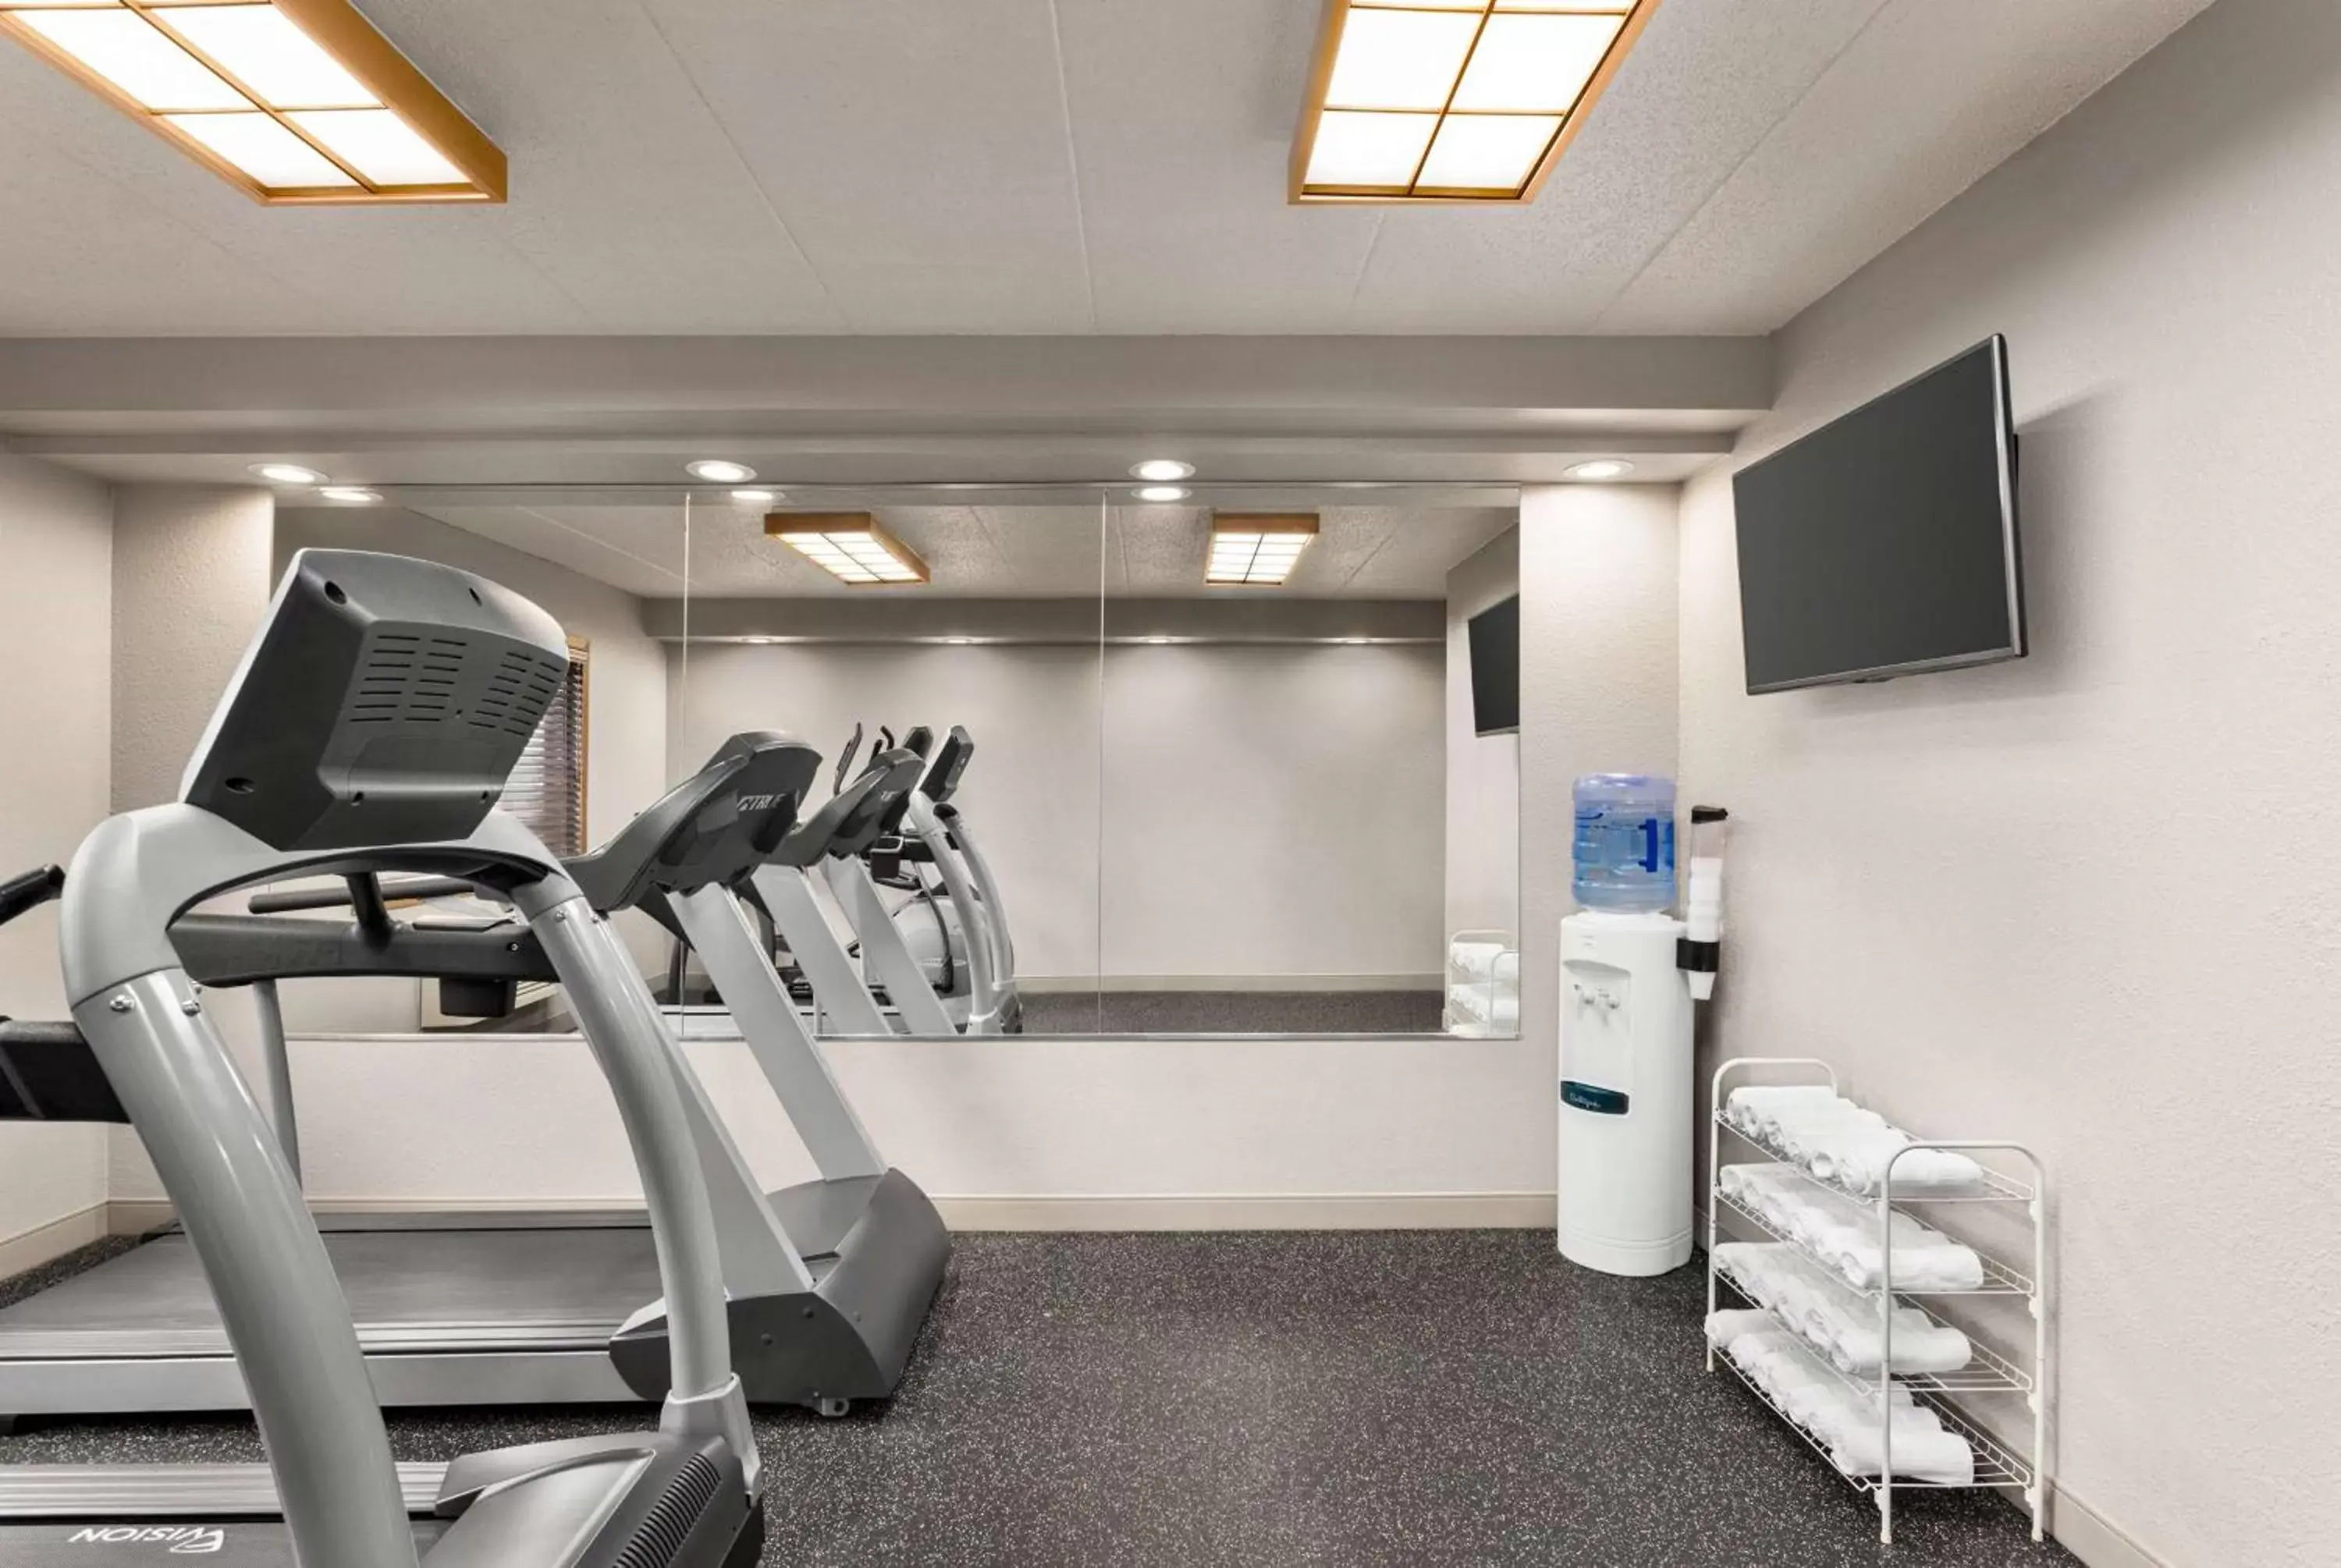 Fitness centre/facilities, Fitness Center/Facilities in AmericInn by Wyndham Bemidji